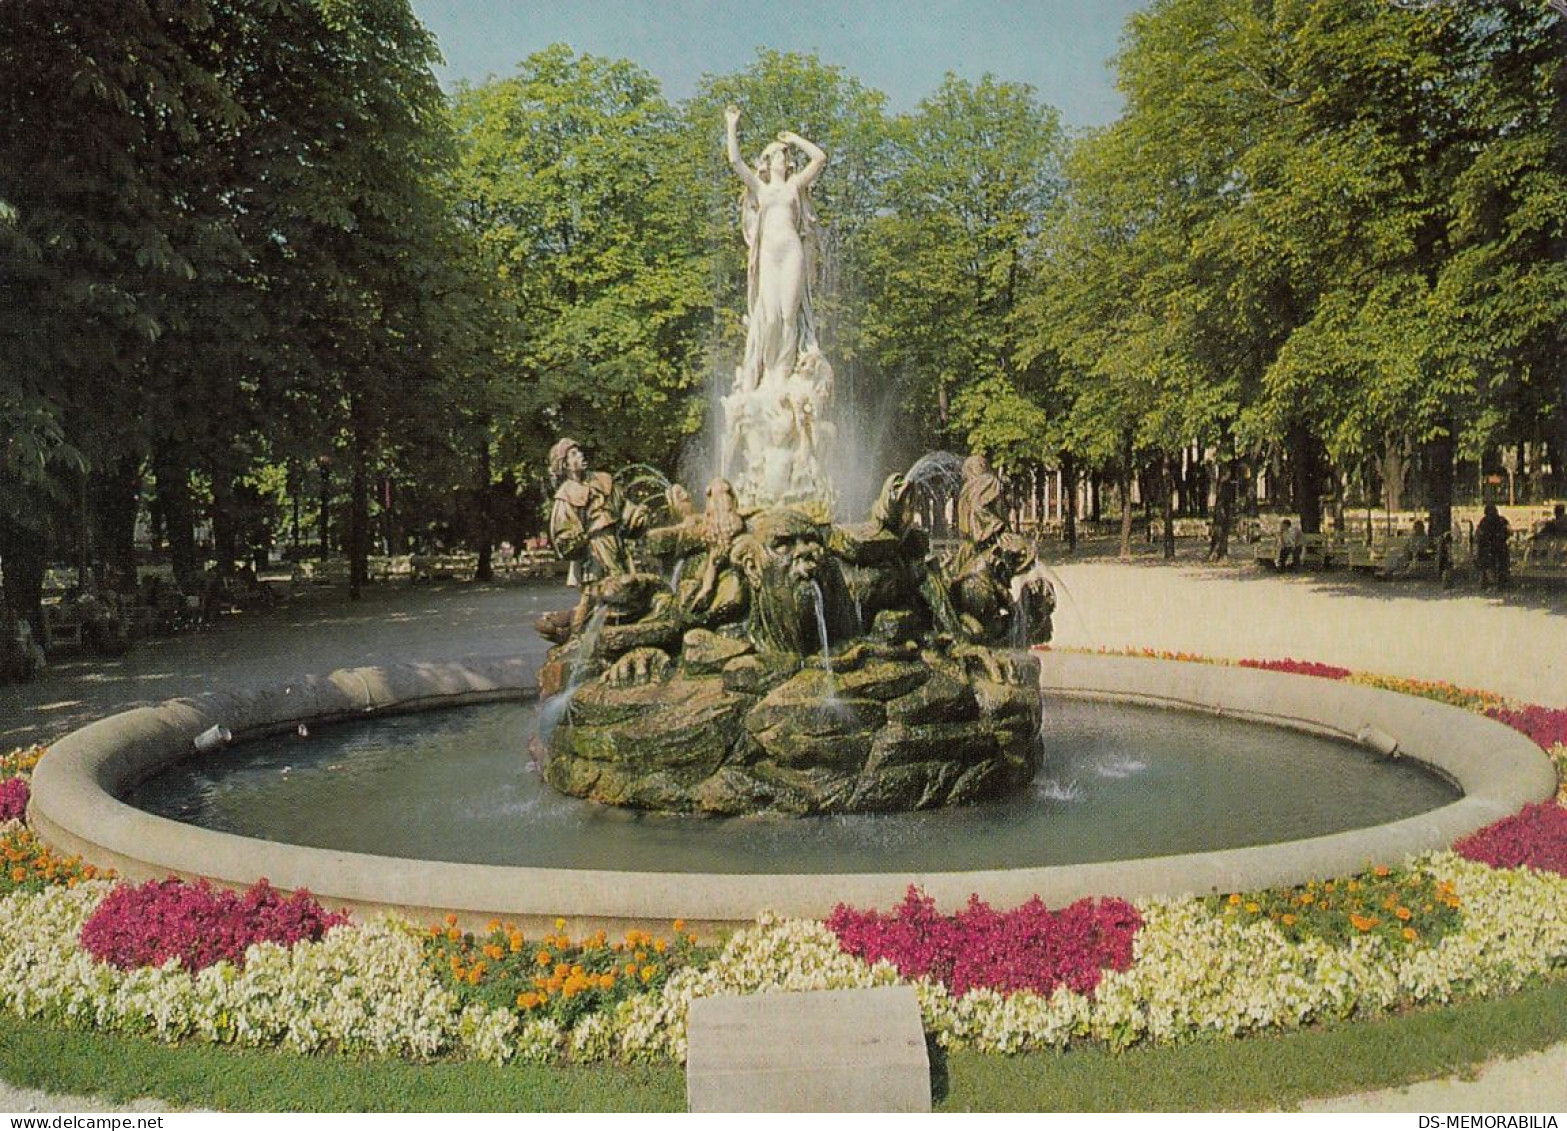 Baden - Undine Brunnen Im Kurpark - Baden Bei Wien